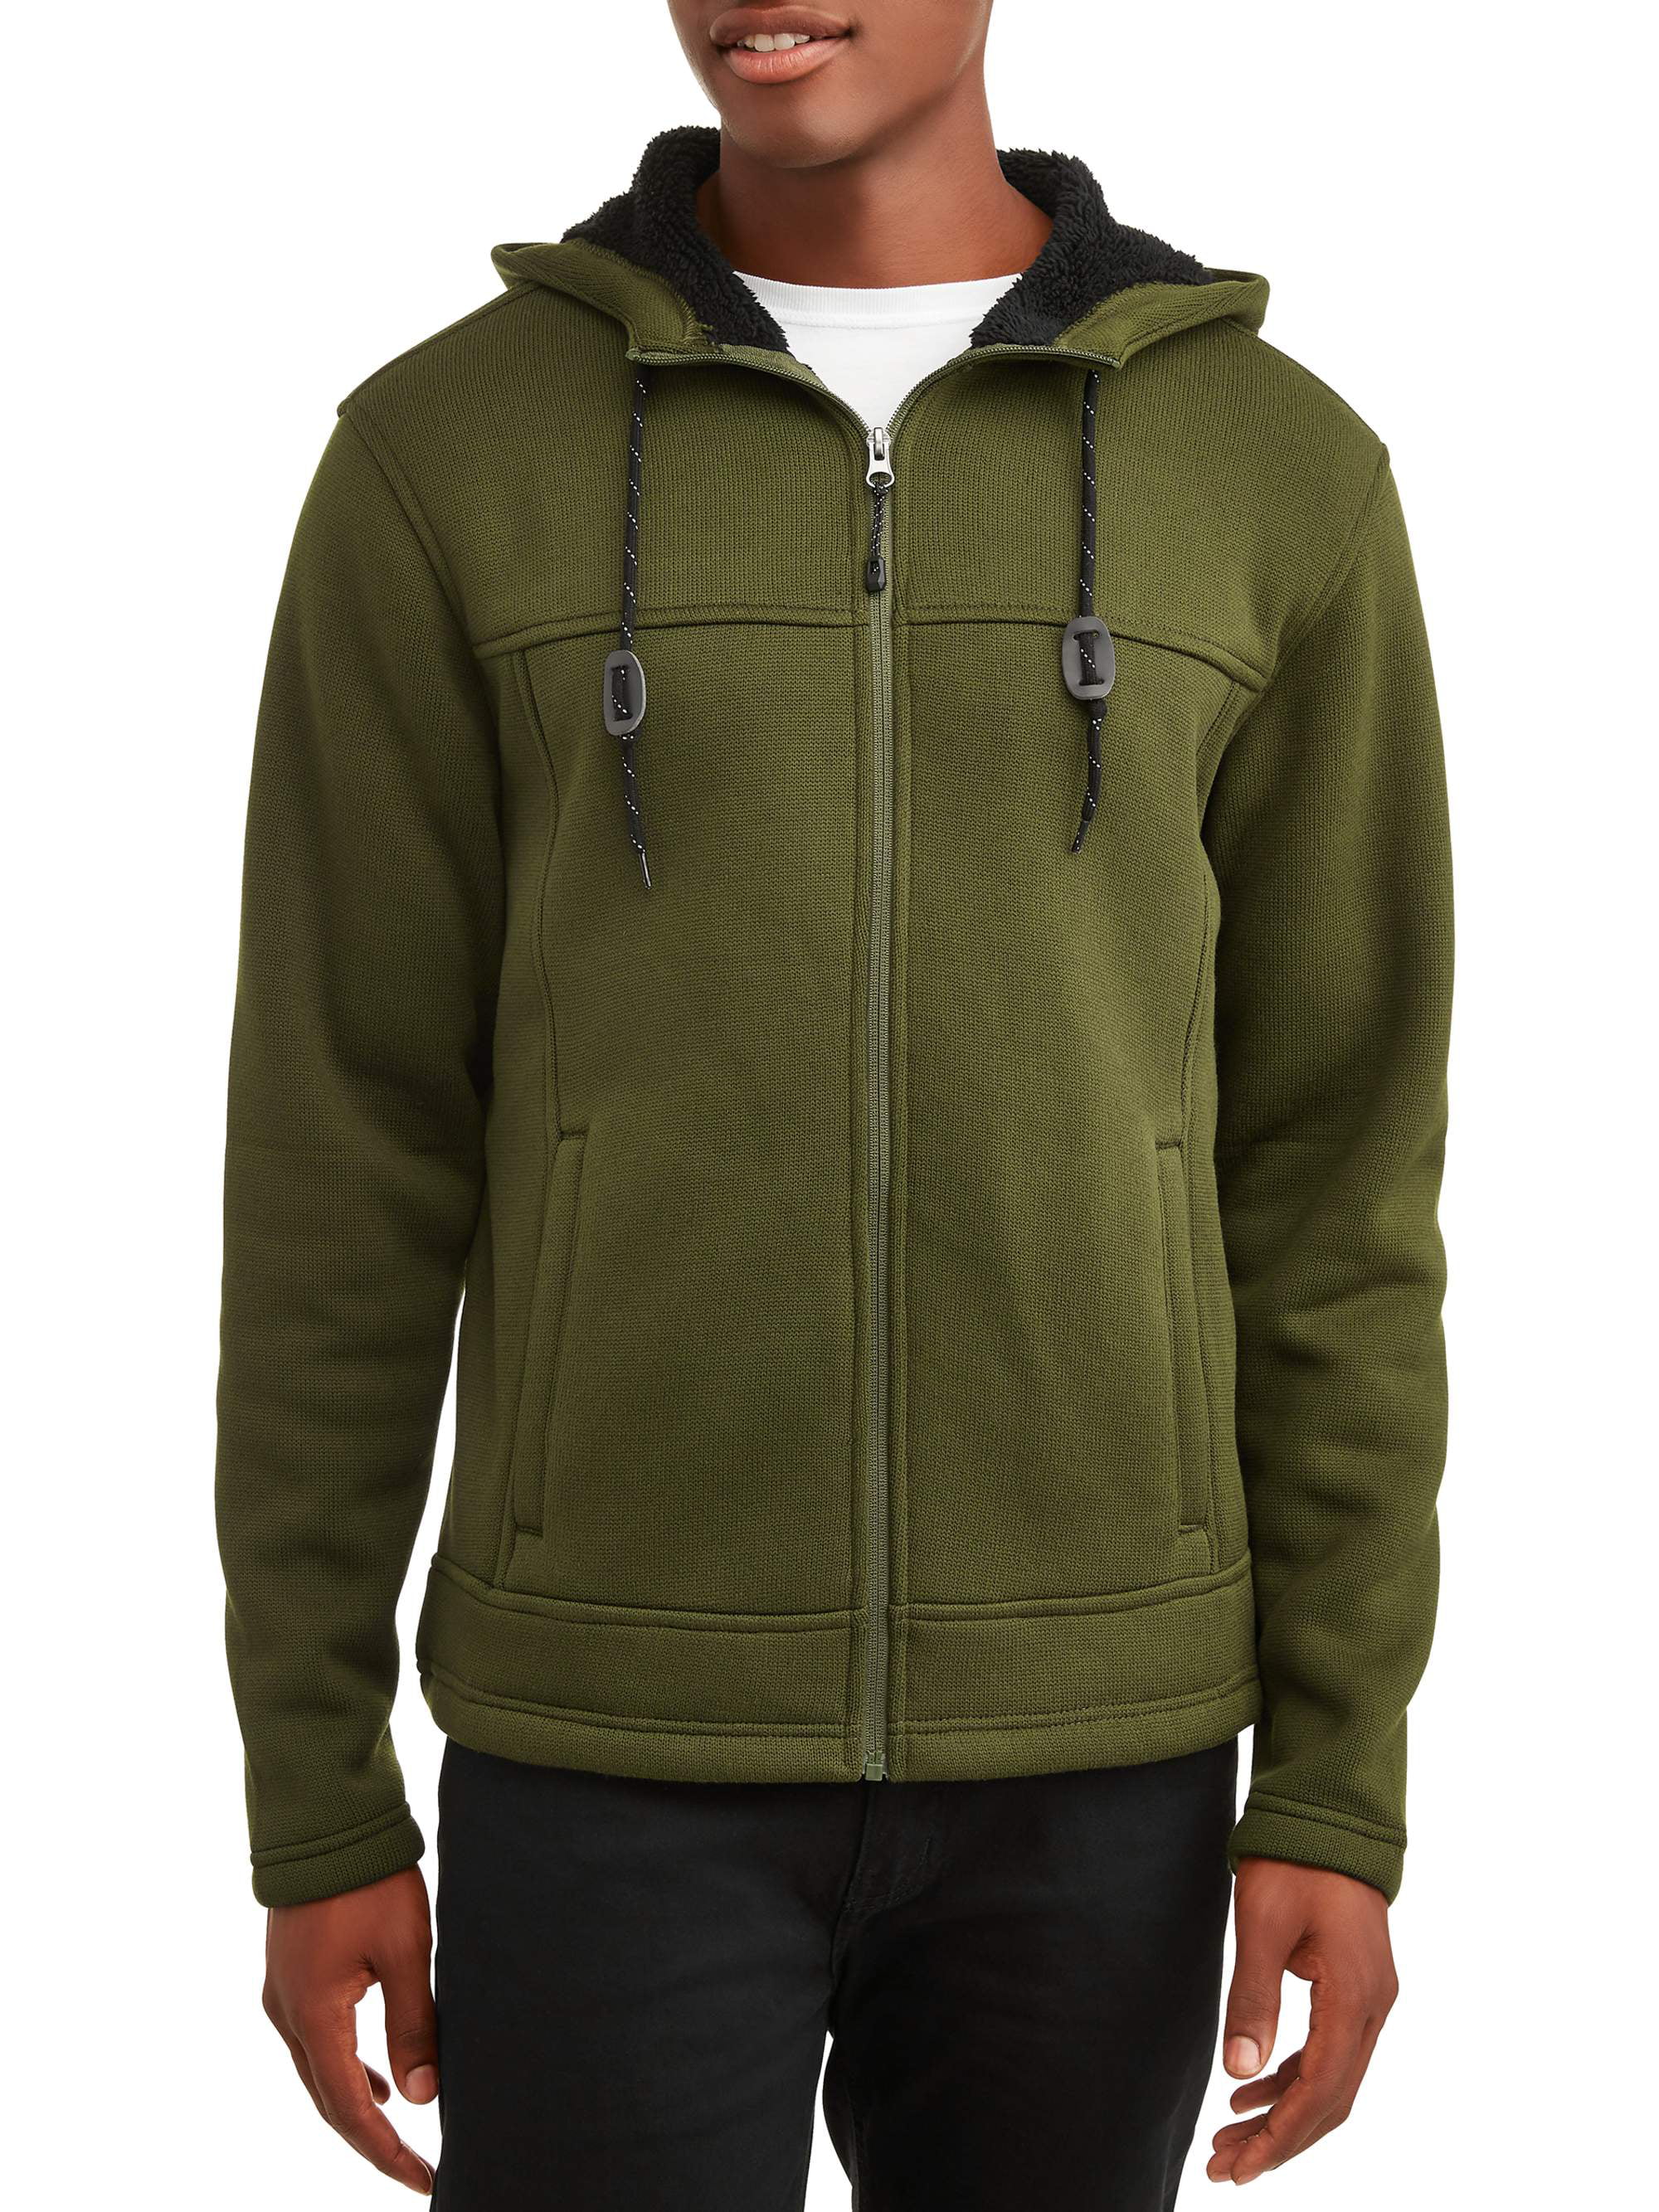 George - George Men's Full Zip Sherpa Sweater Fleece, up to Size 5XL ...